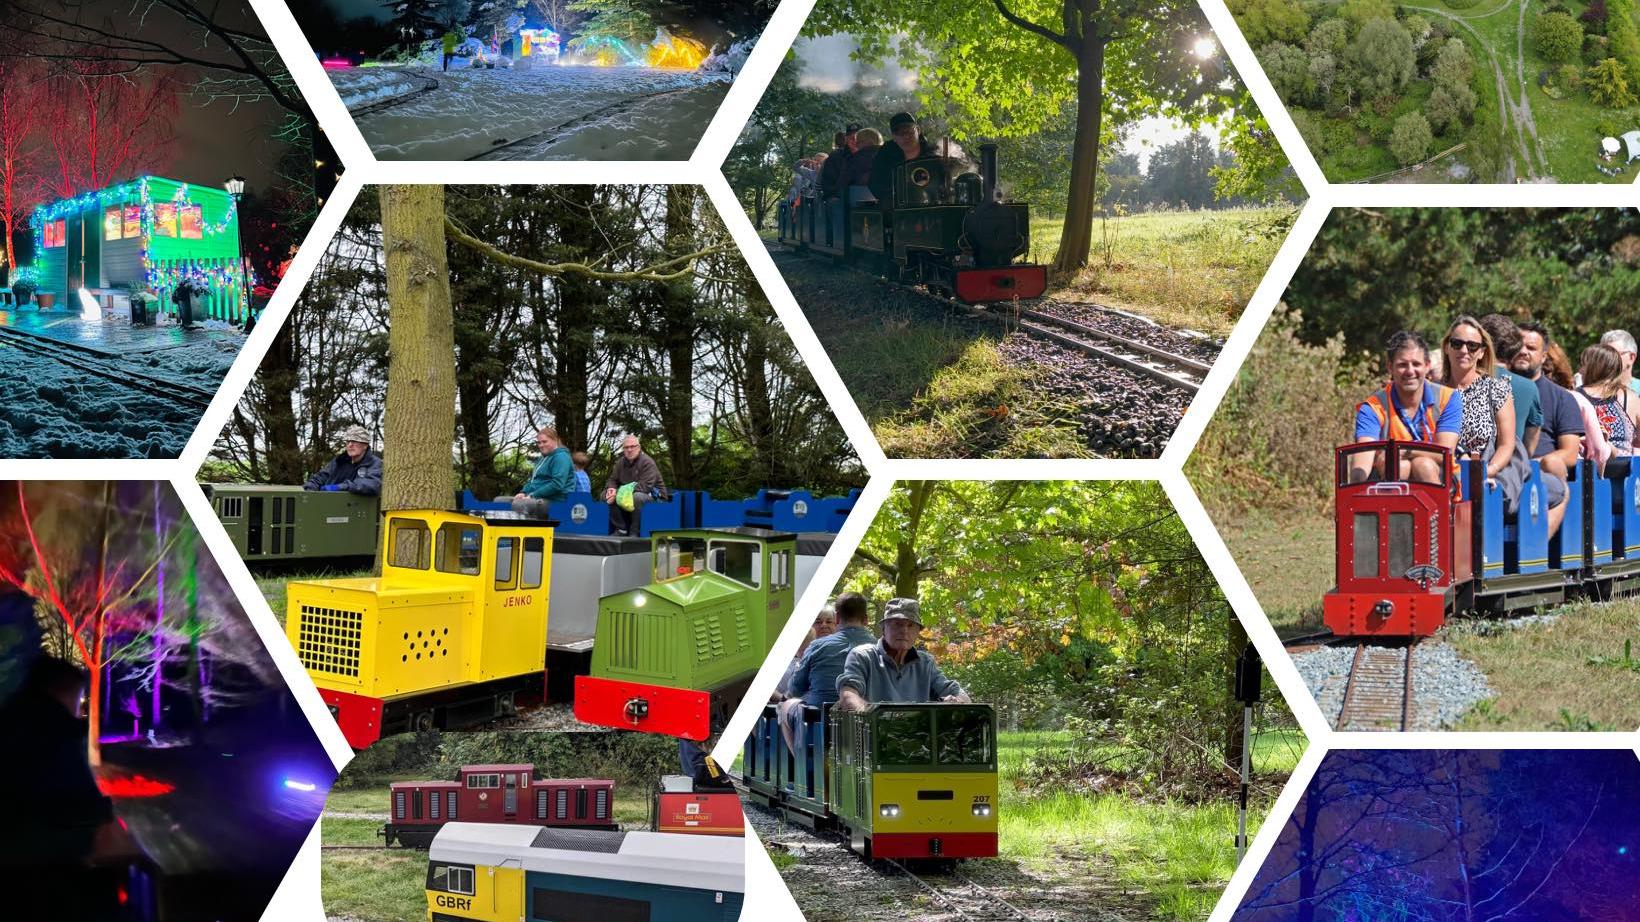 North Weald & District Miniature Railway